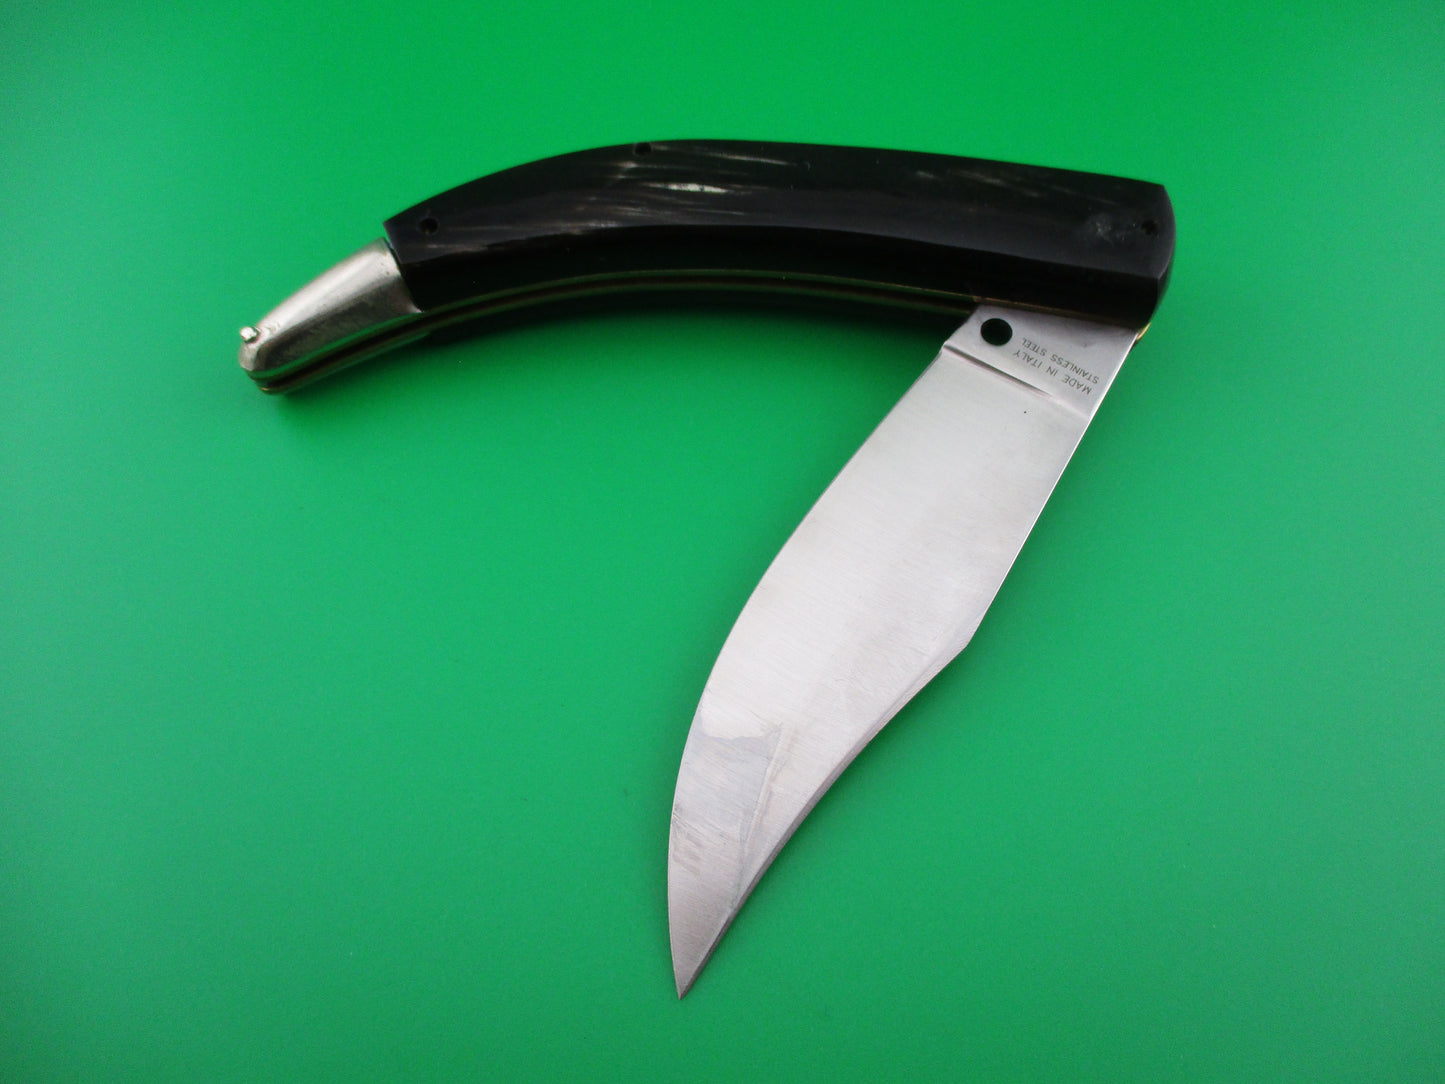 AKC 22cm Italian Catalana style curved switchblade knife